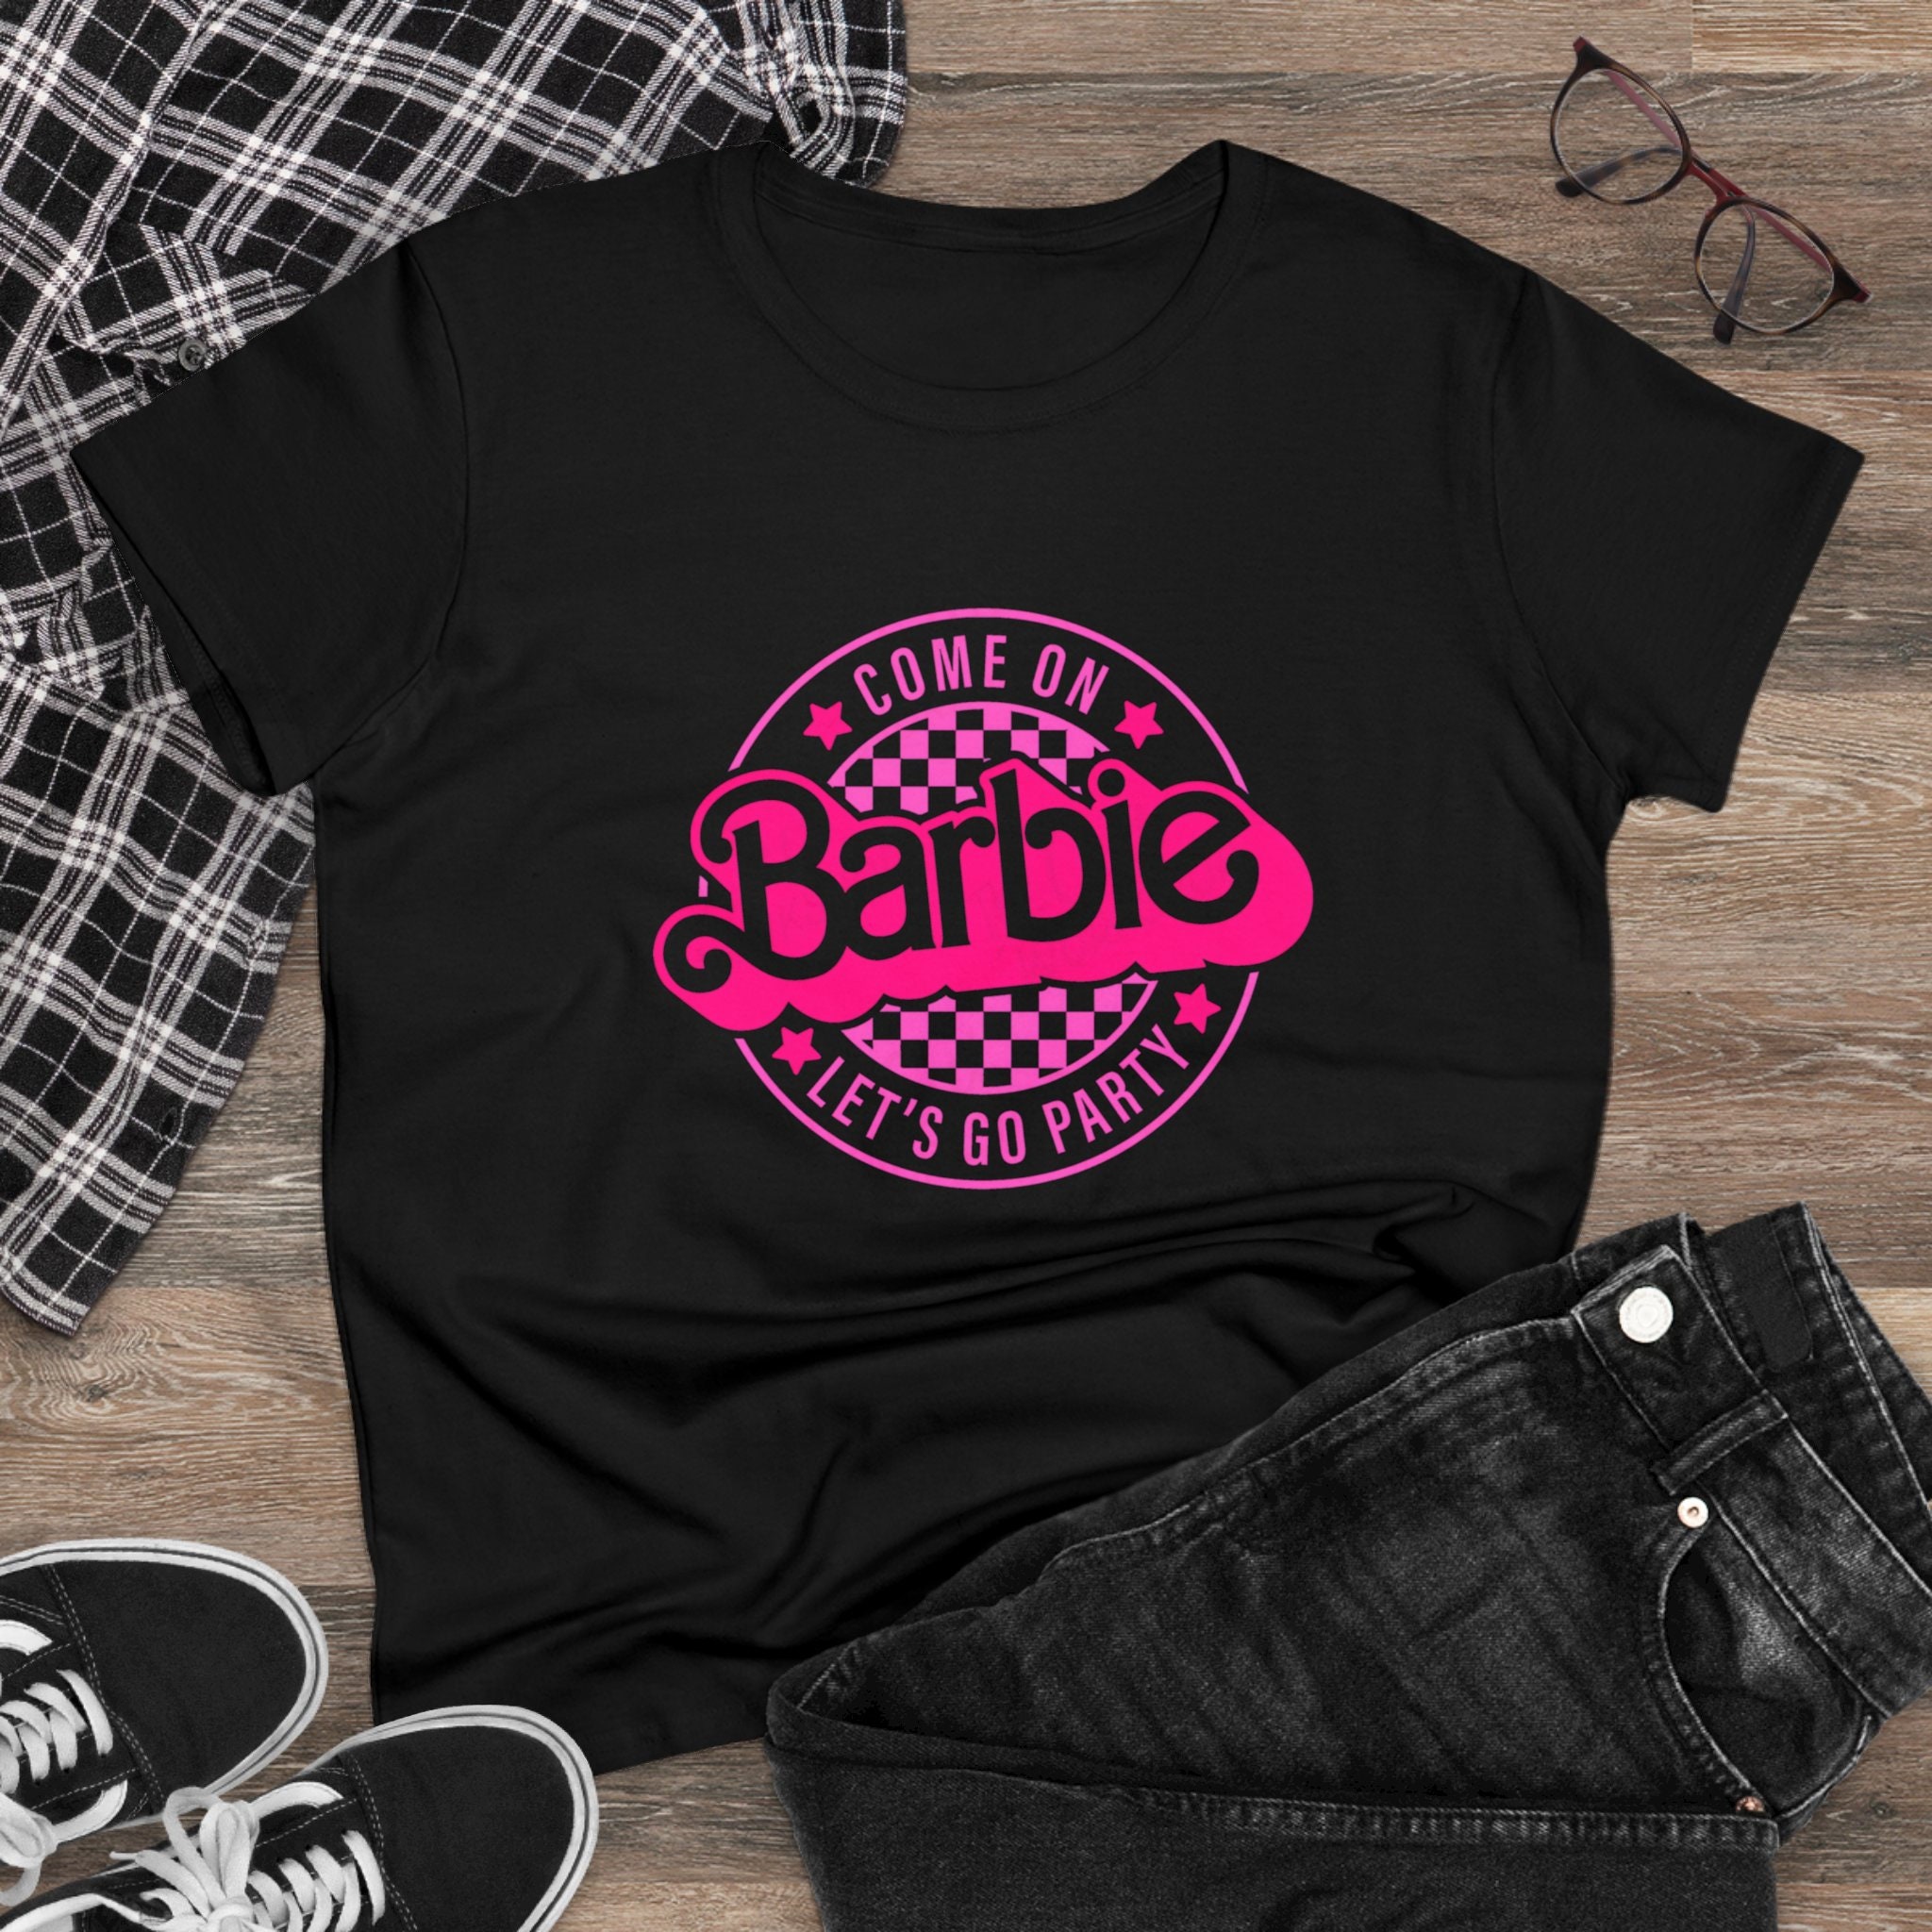 Barbie T-Shirt Damen, T Shirts Damen Sommer, Baumwolle Tshirt Damen